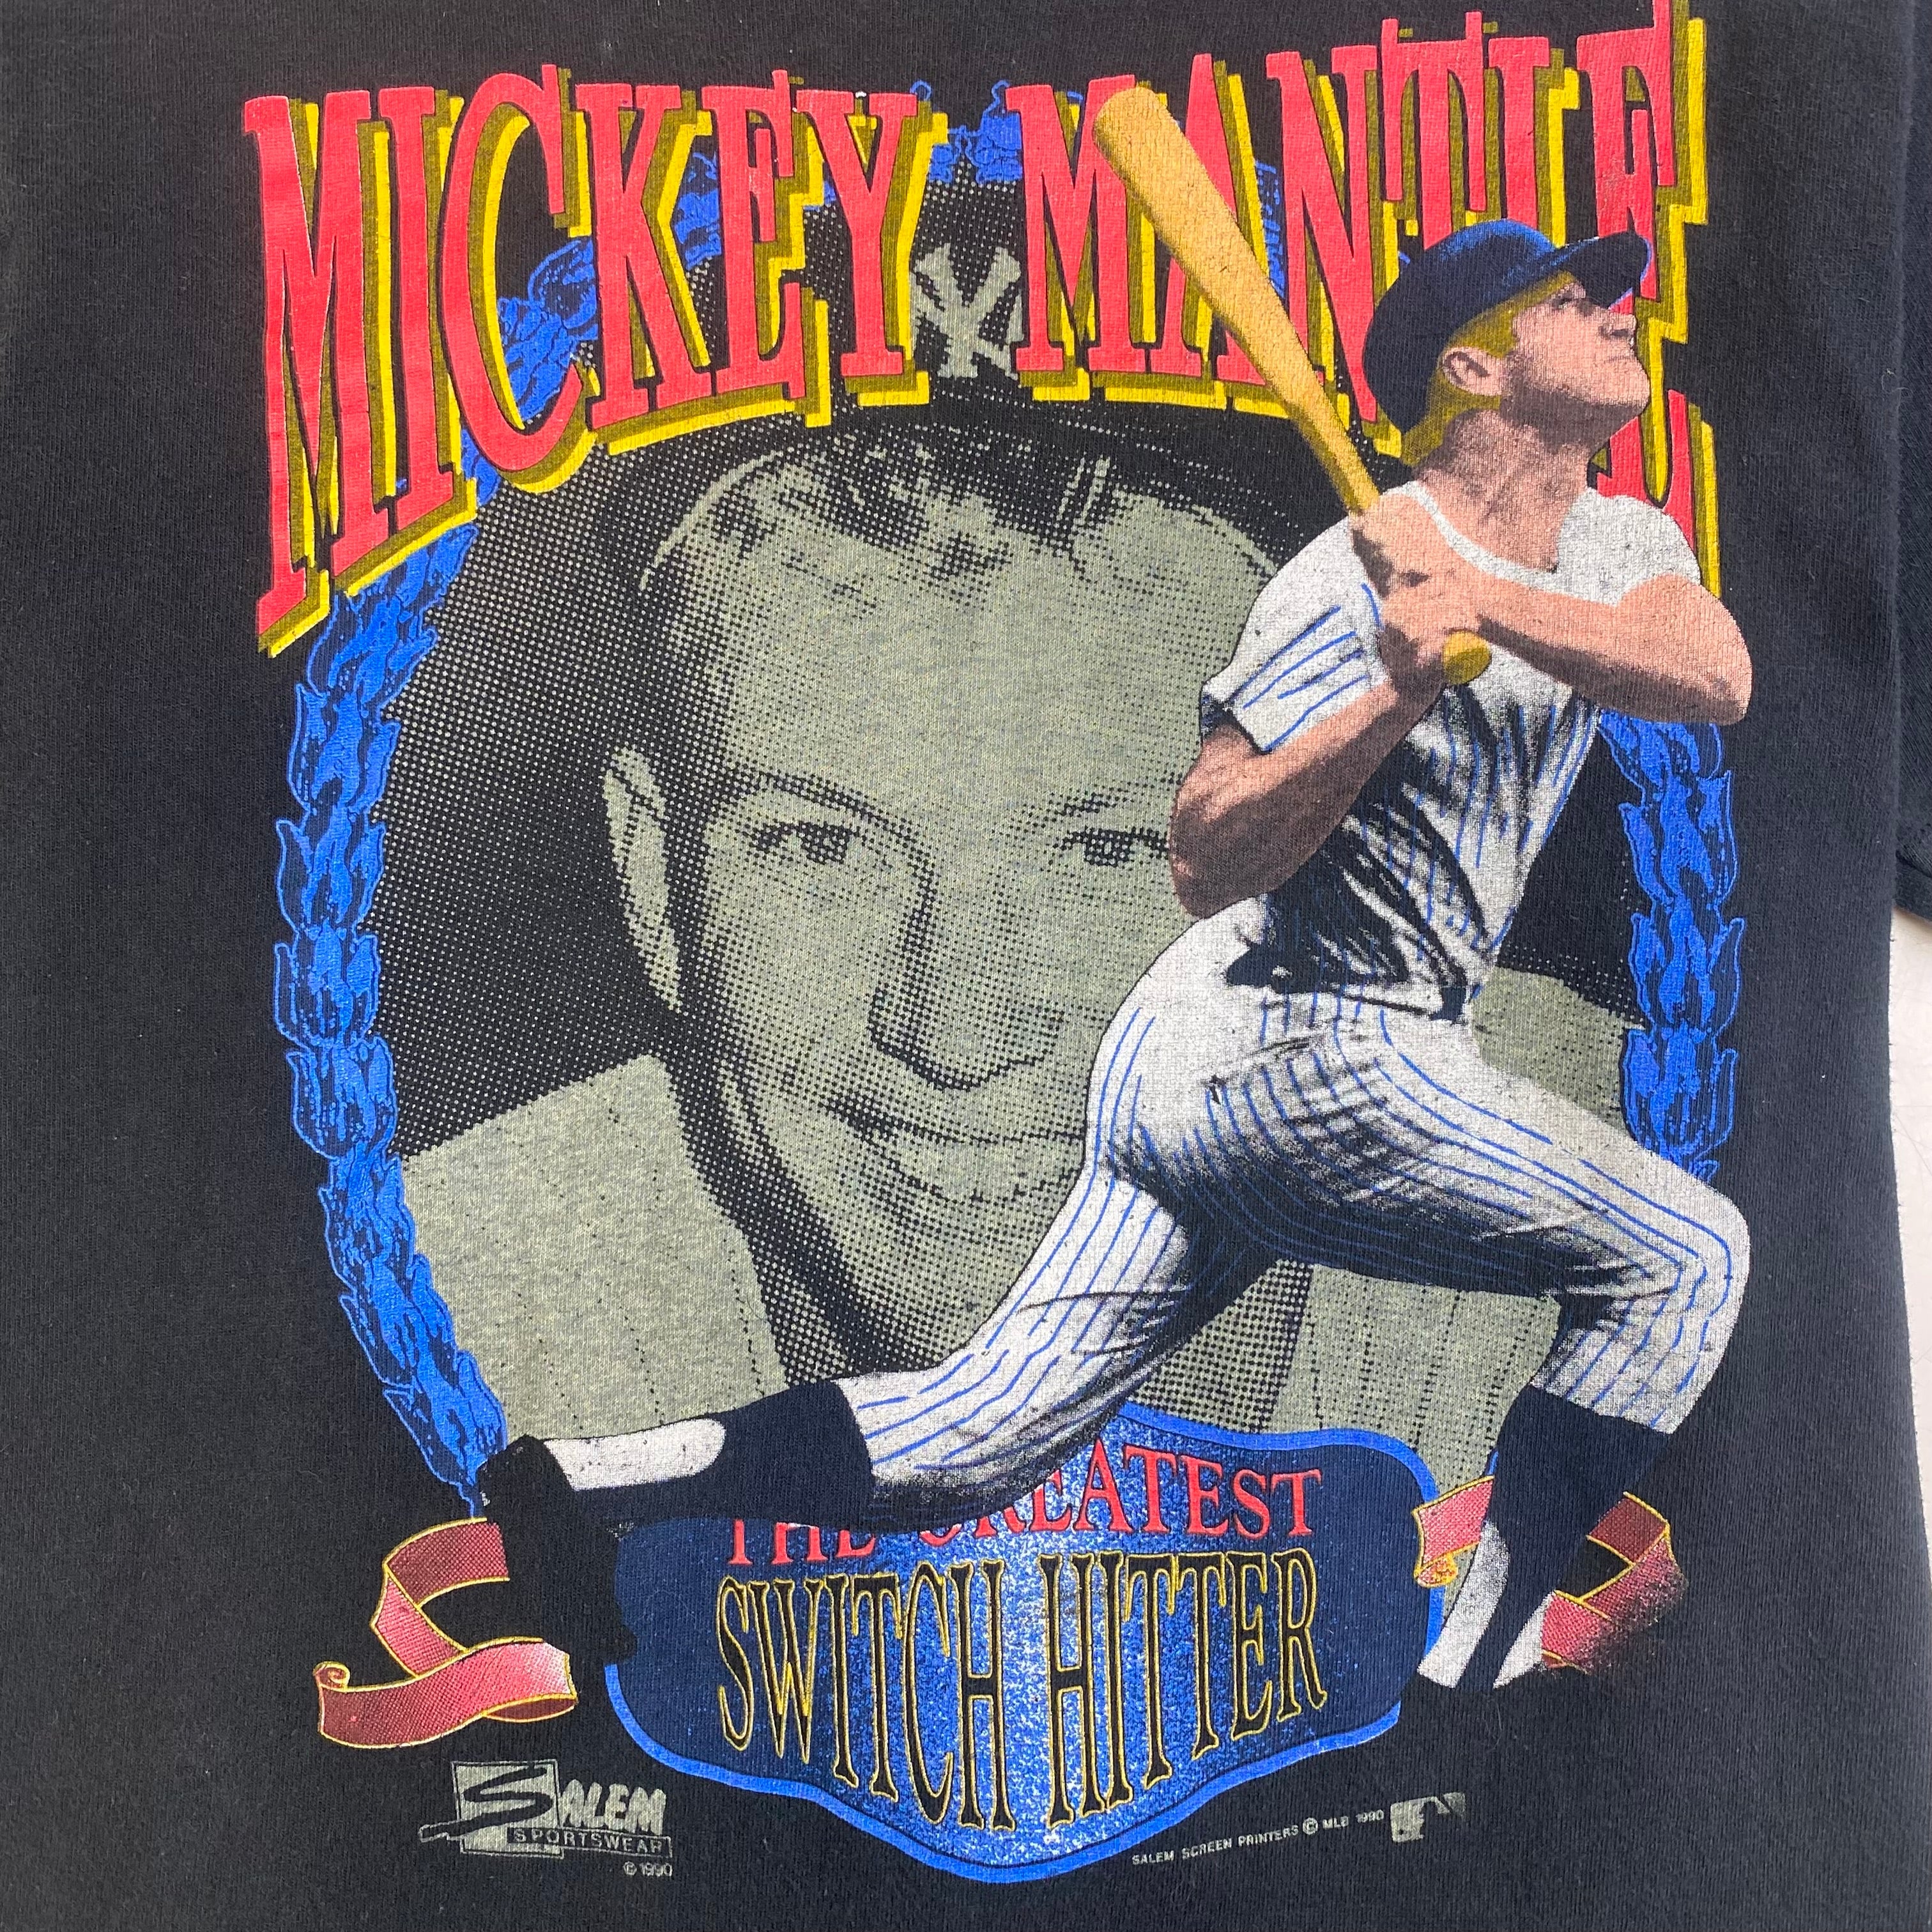 1990 Mickey Mantle T-Shirt - Black